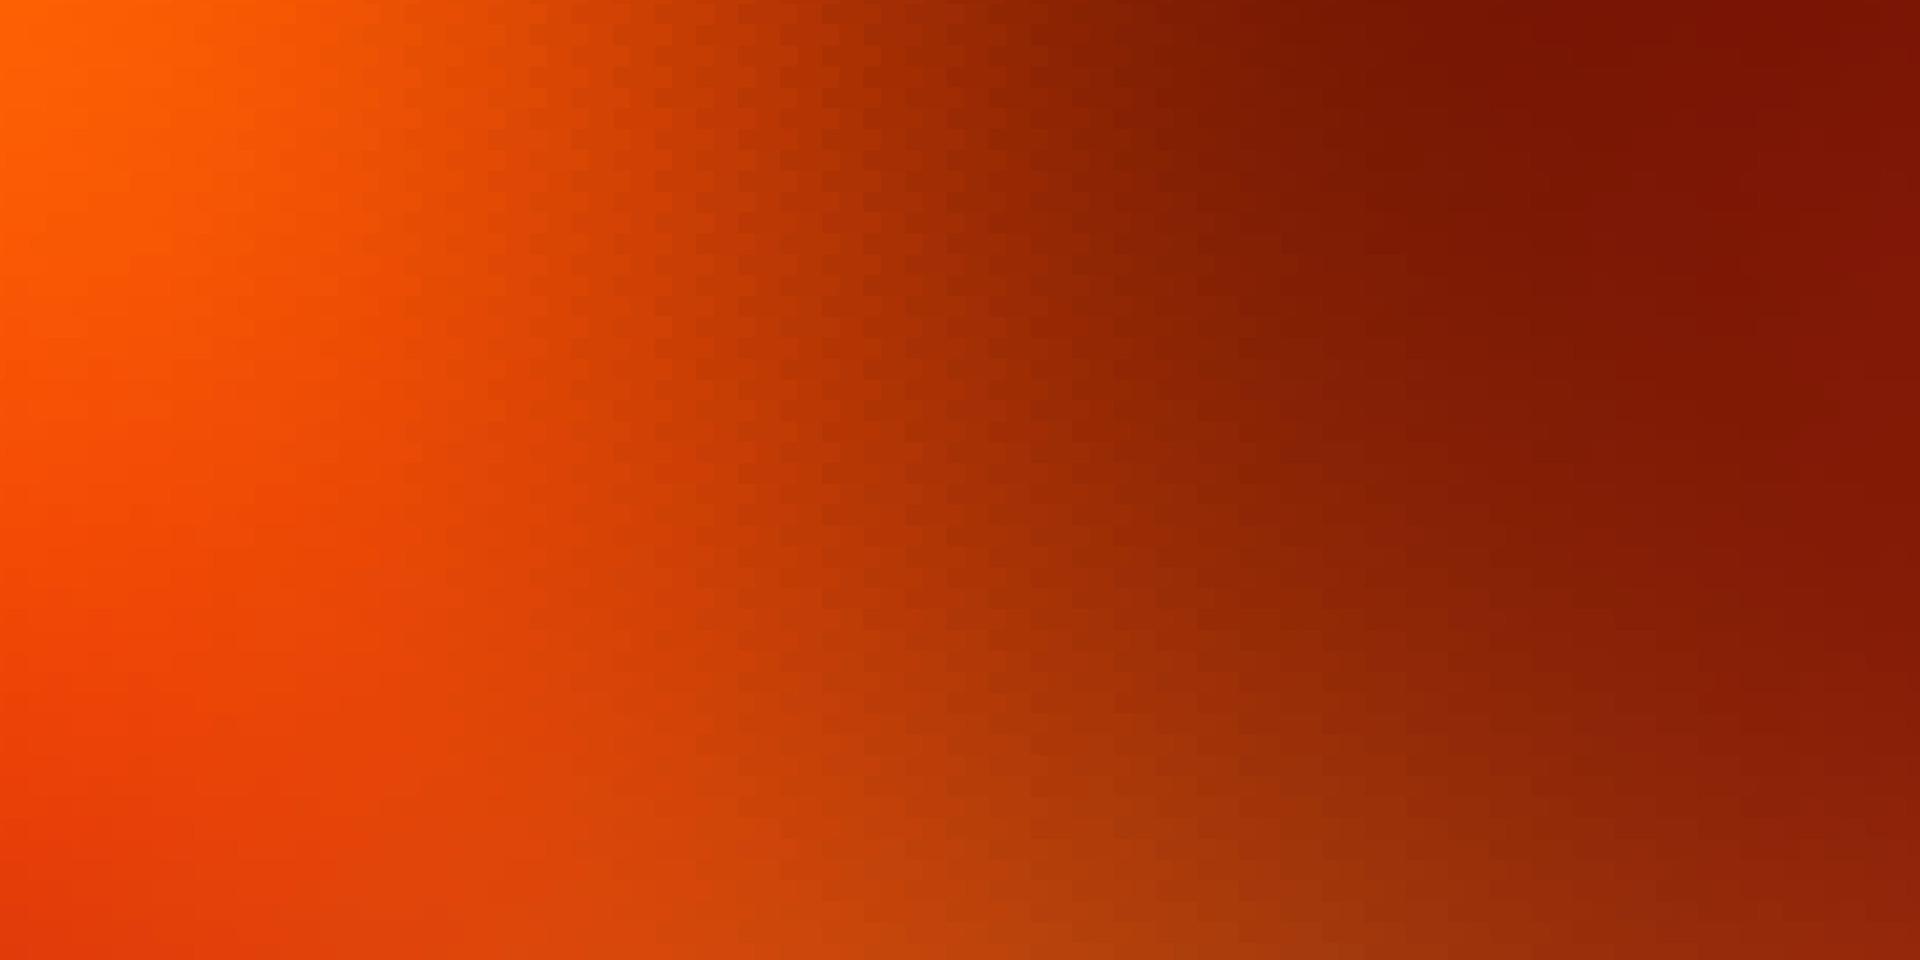 Light Orange vector template in rectangles.